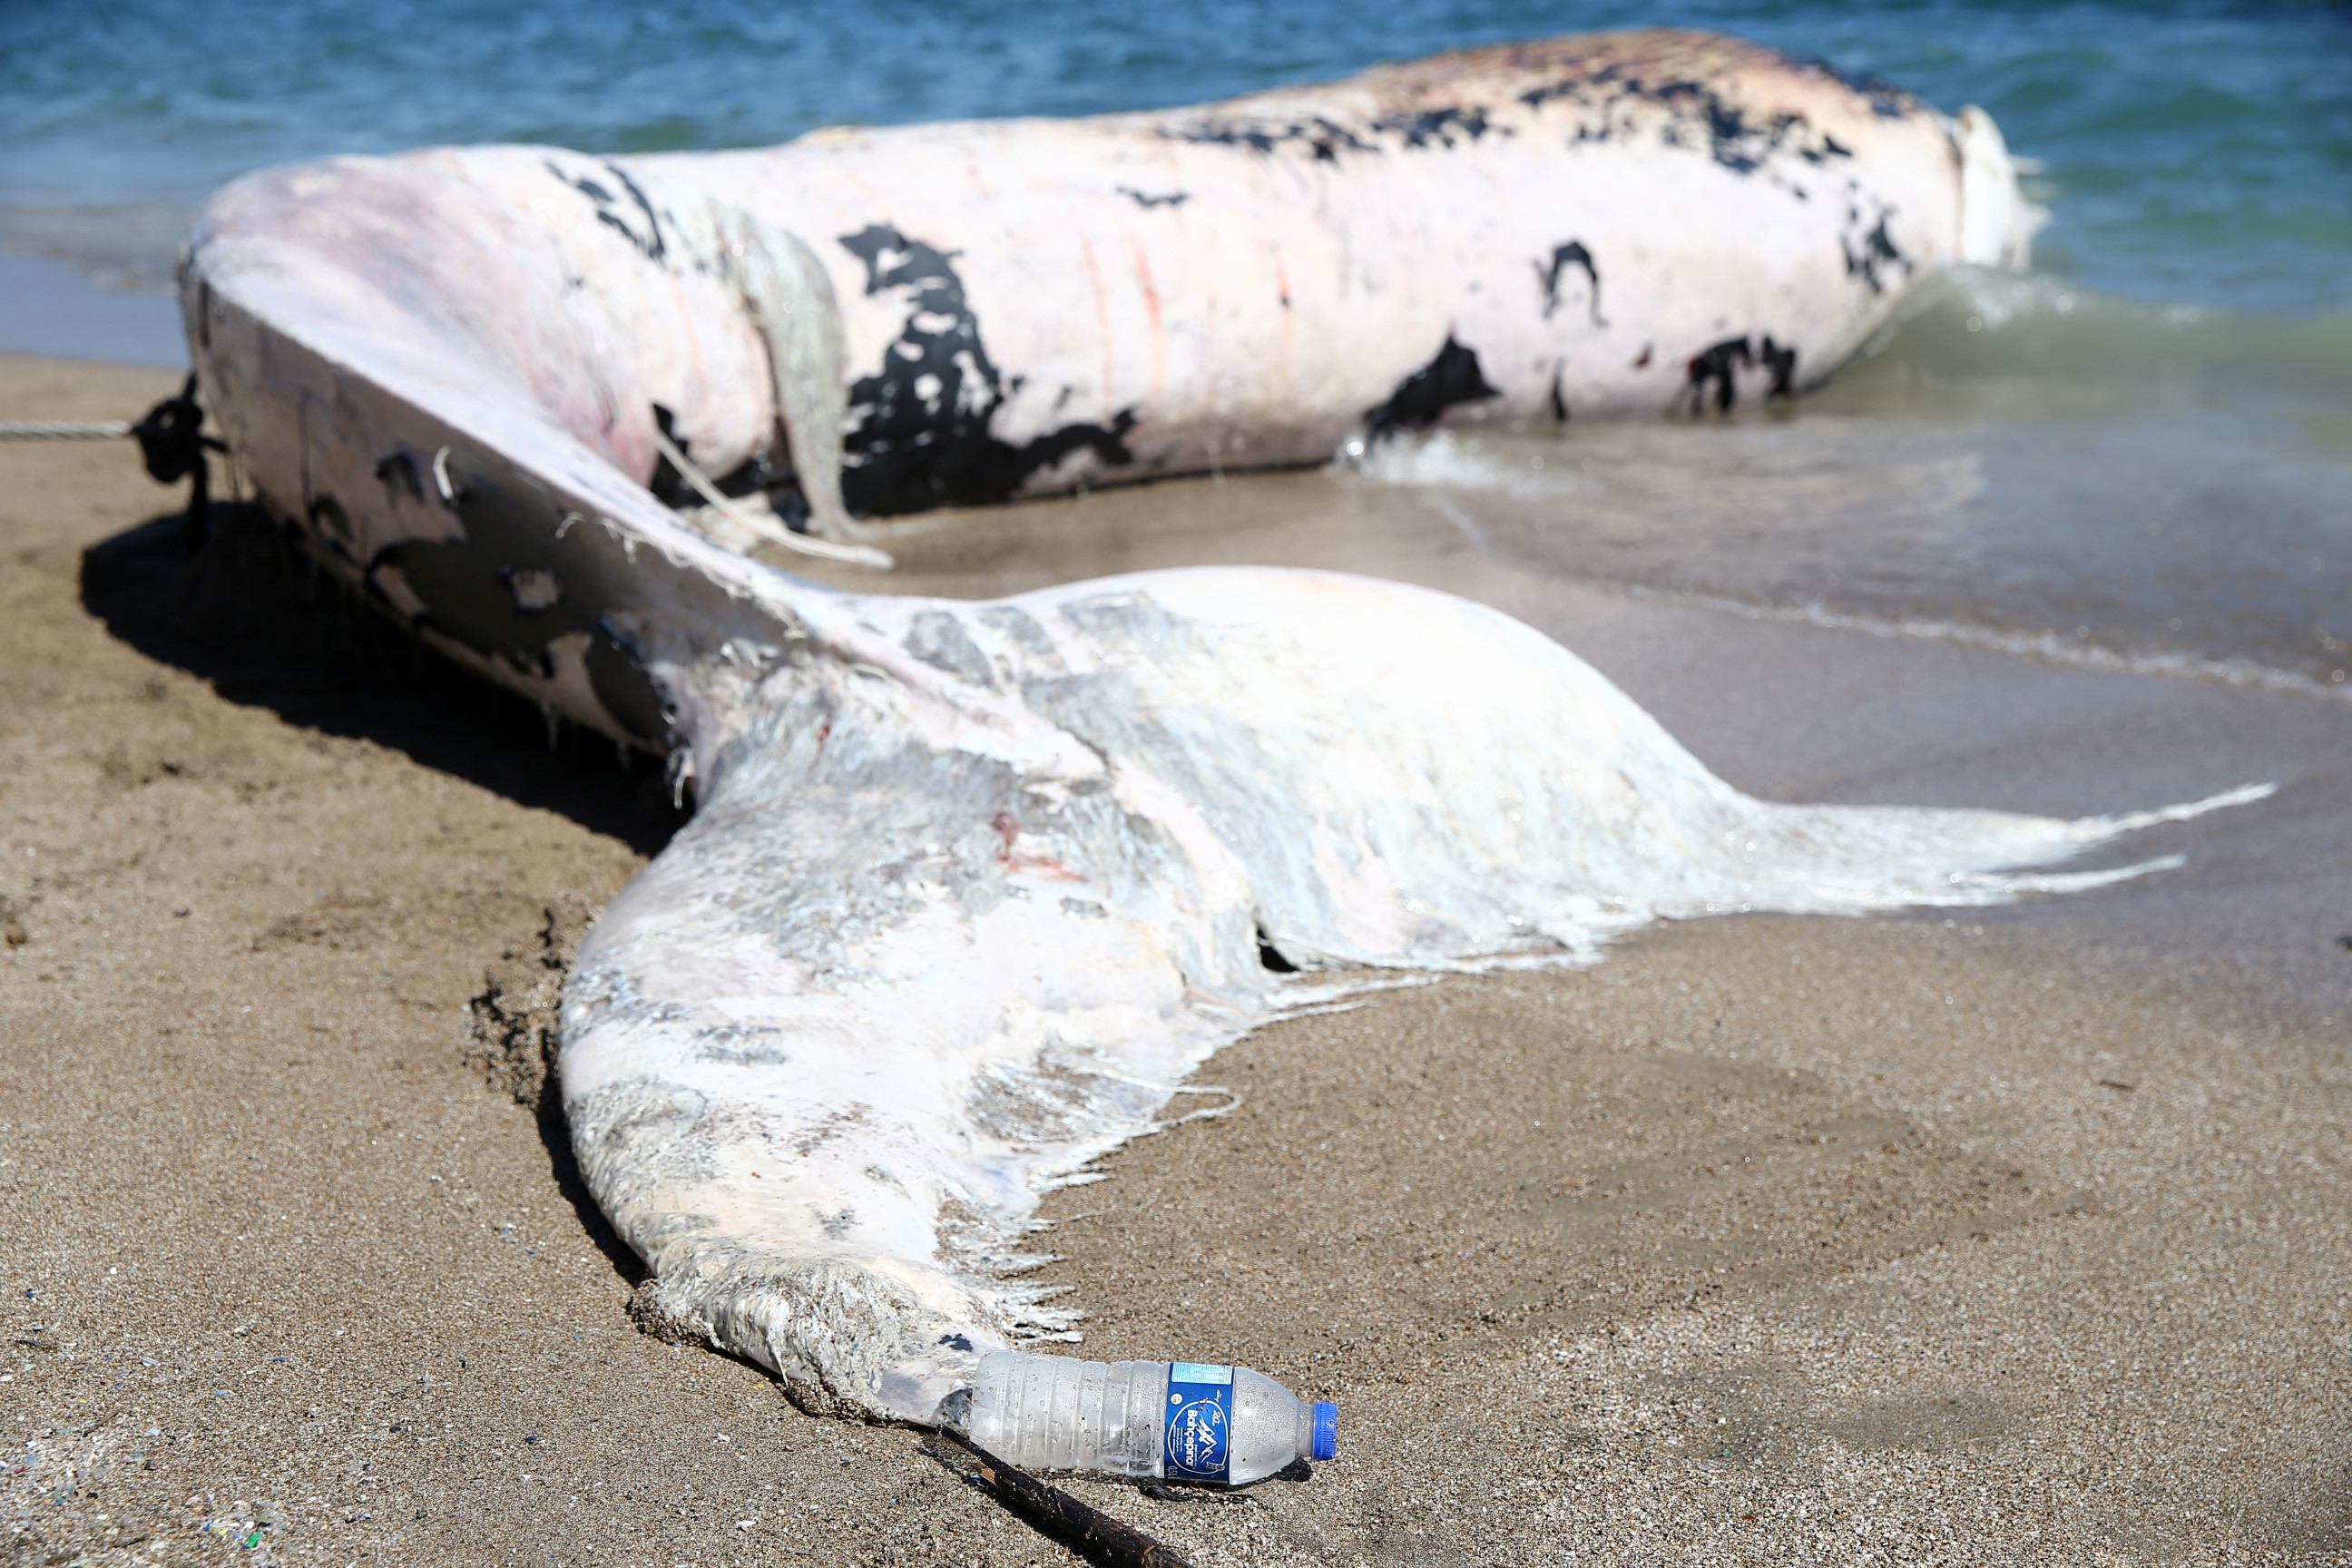 Mersin sahiline 14 metrelik oluklu balina vurdu - Resim: 1